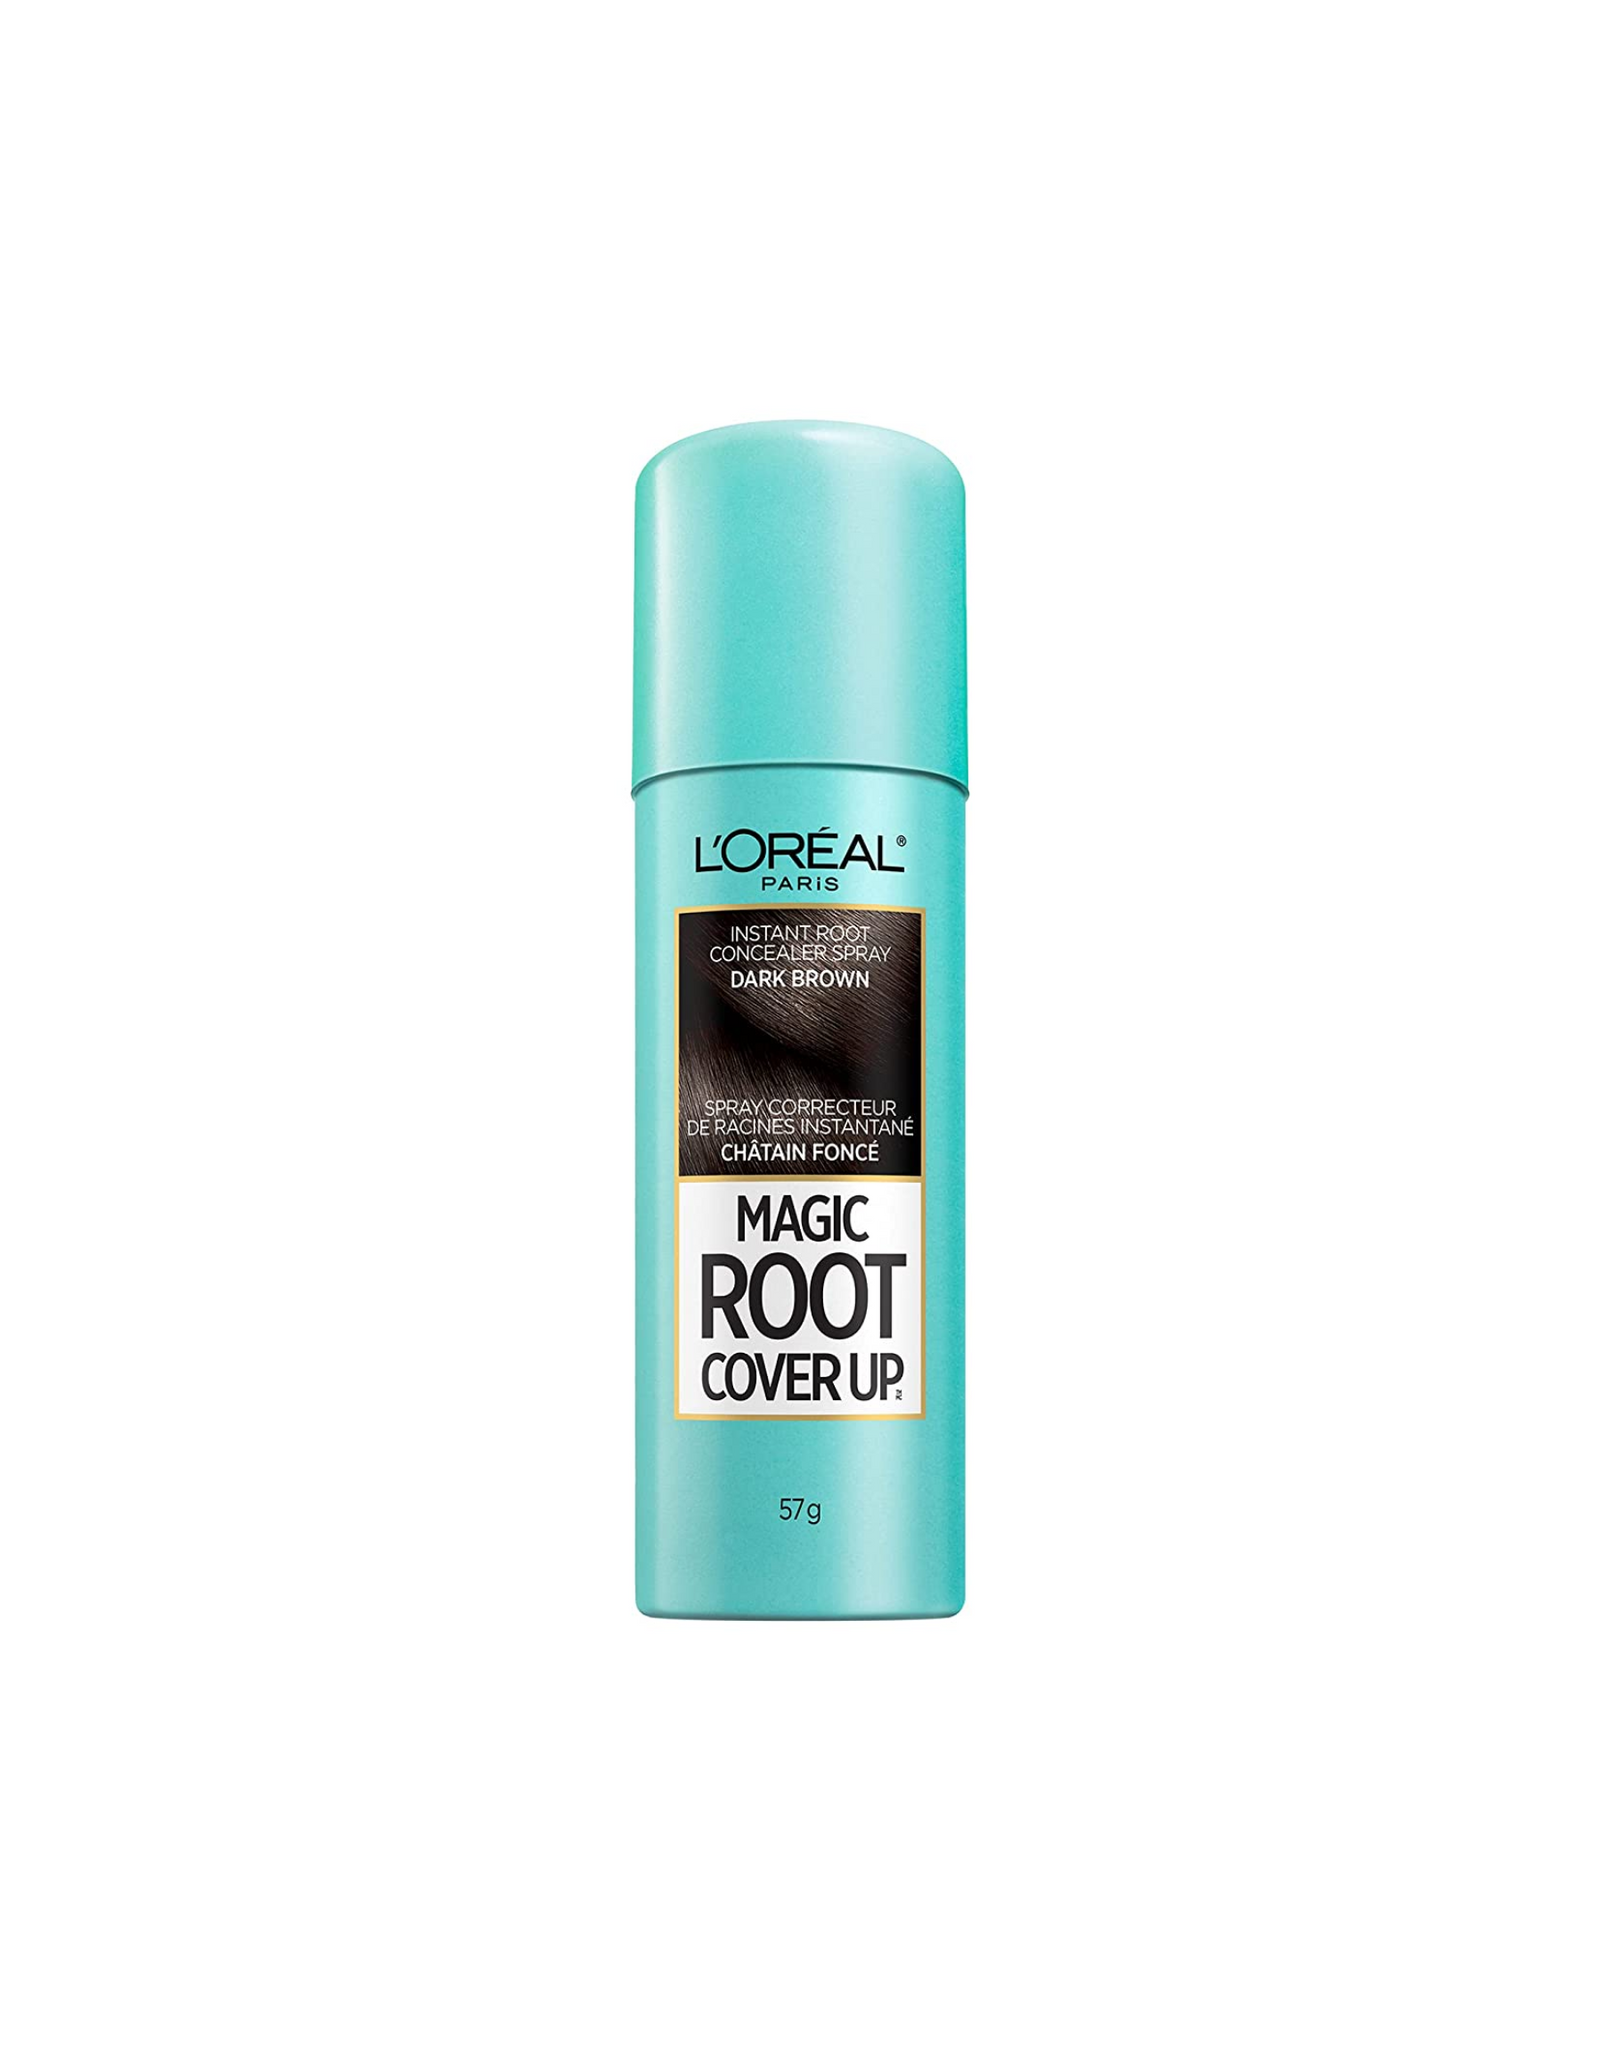 L'Oreal Paris Magic Root Cover Up Instant Root Concealer Spray, Dark Brown, 2 oz (Pack of 1)